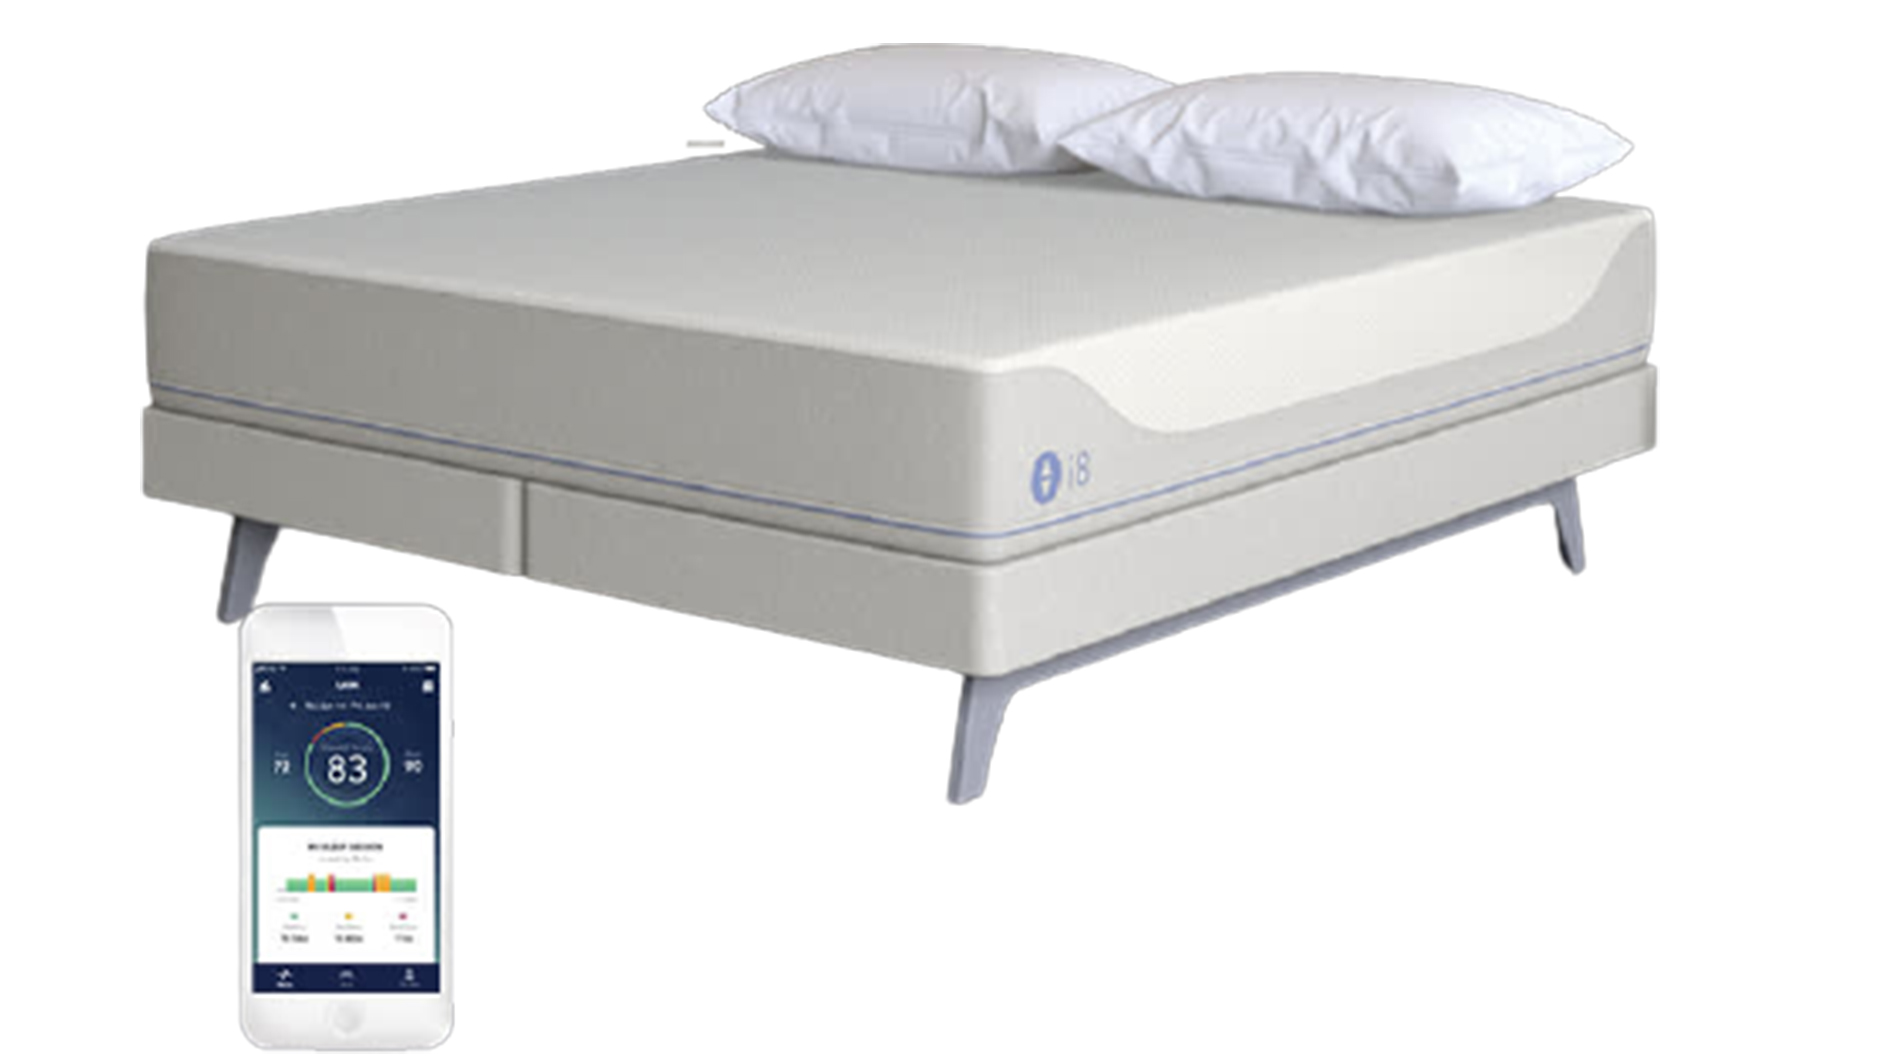 Best smart beds and smart mattress: Sleep Number 360 i8 Smart Bed